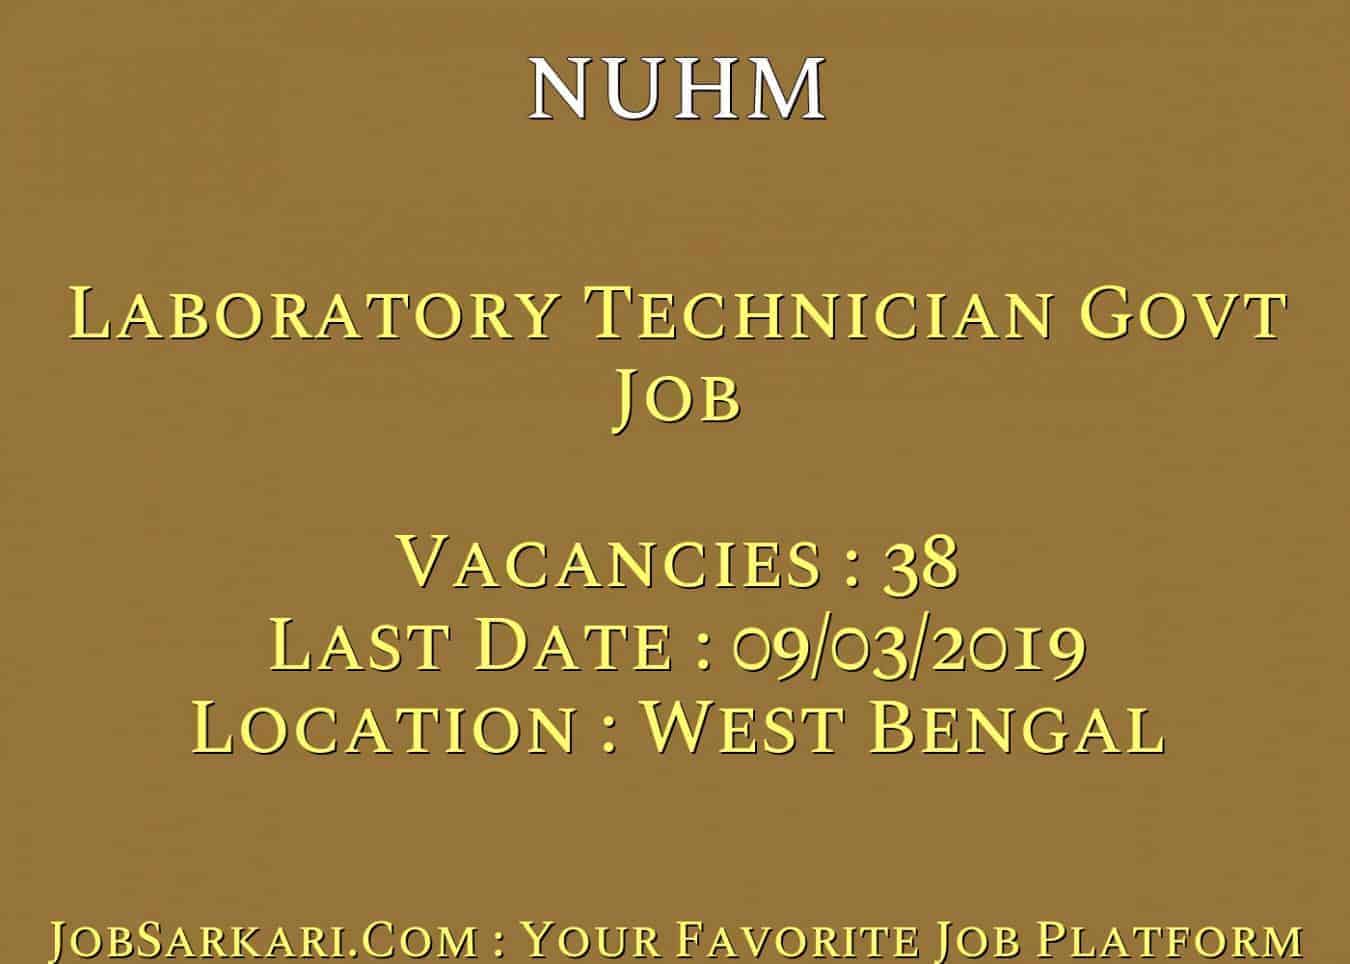 NUHM Recruitment 2019 For Laboratory Technician Govt Job